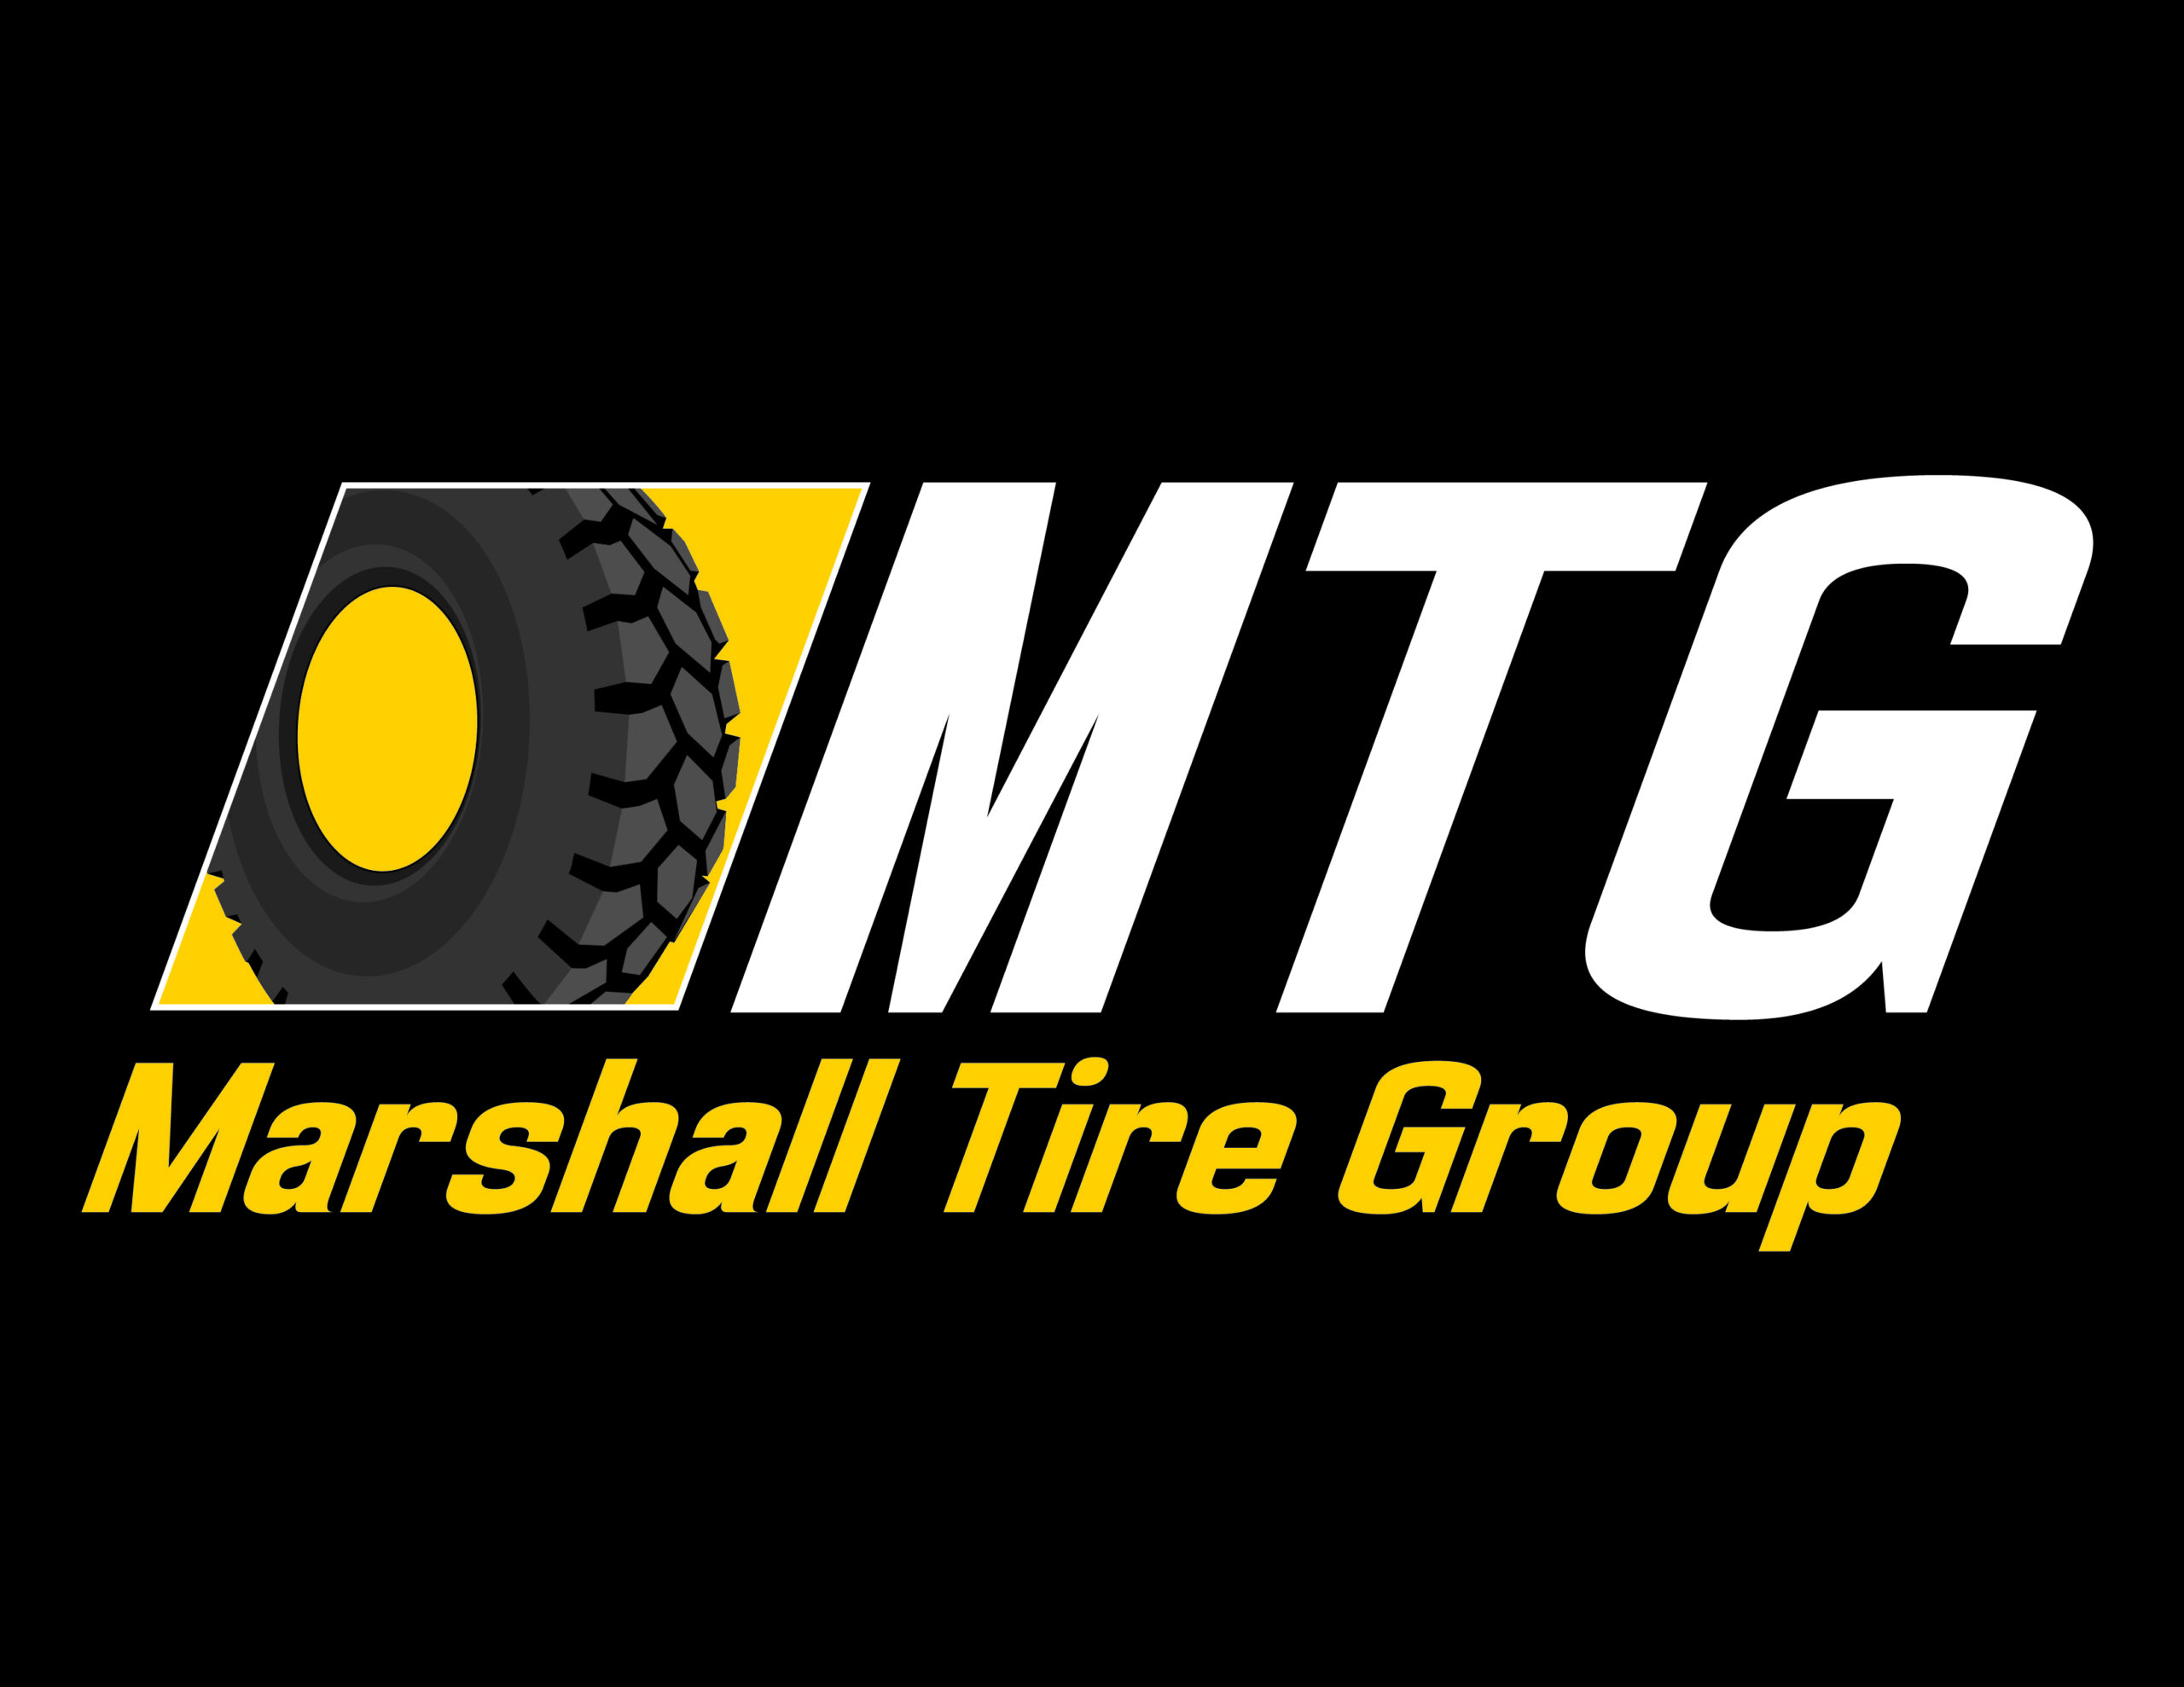 Marshall Tire Group